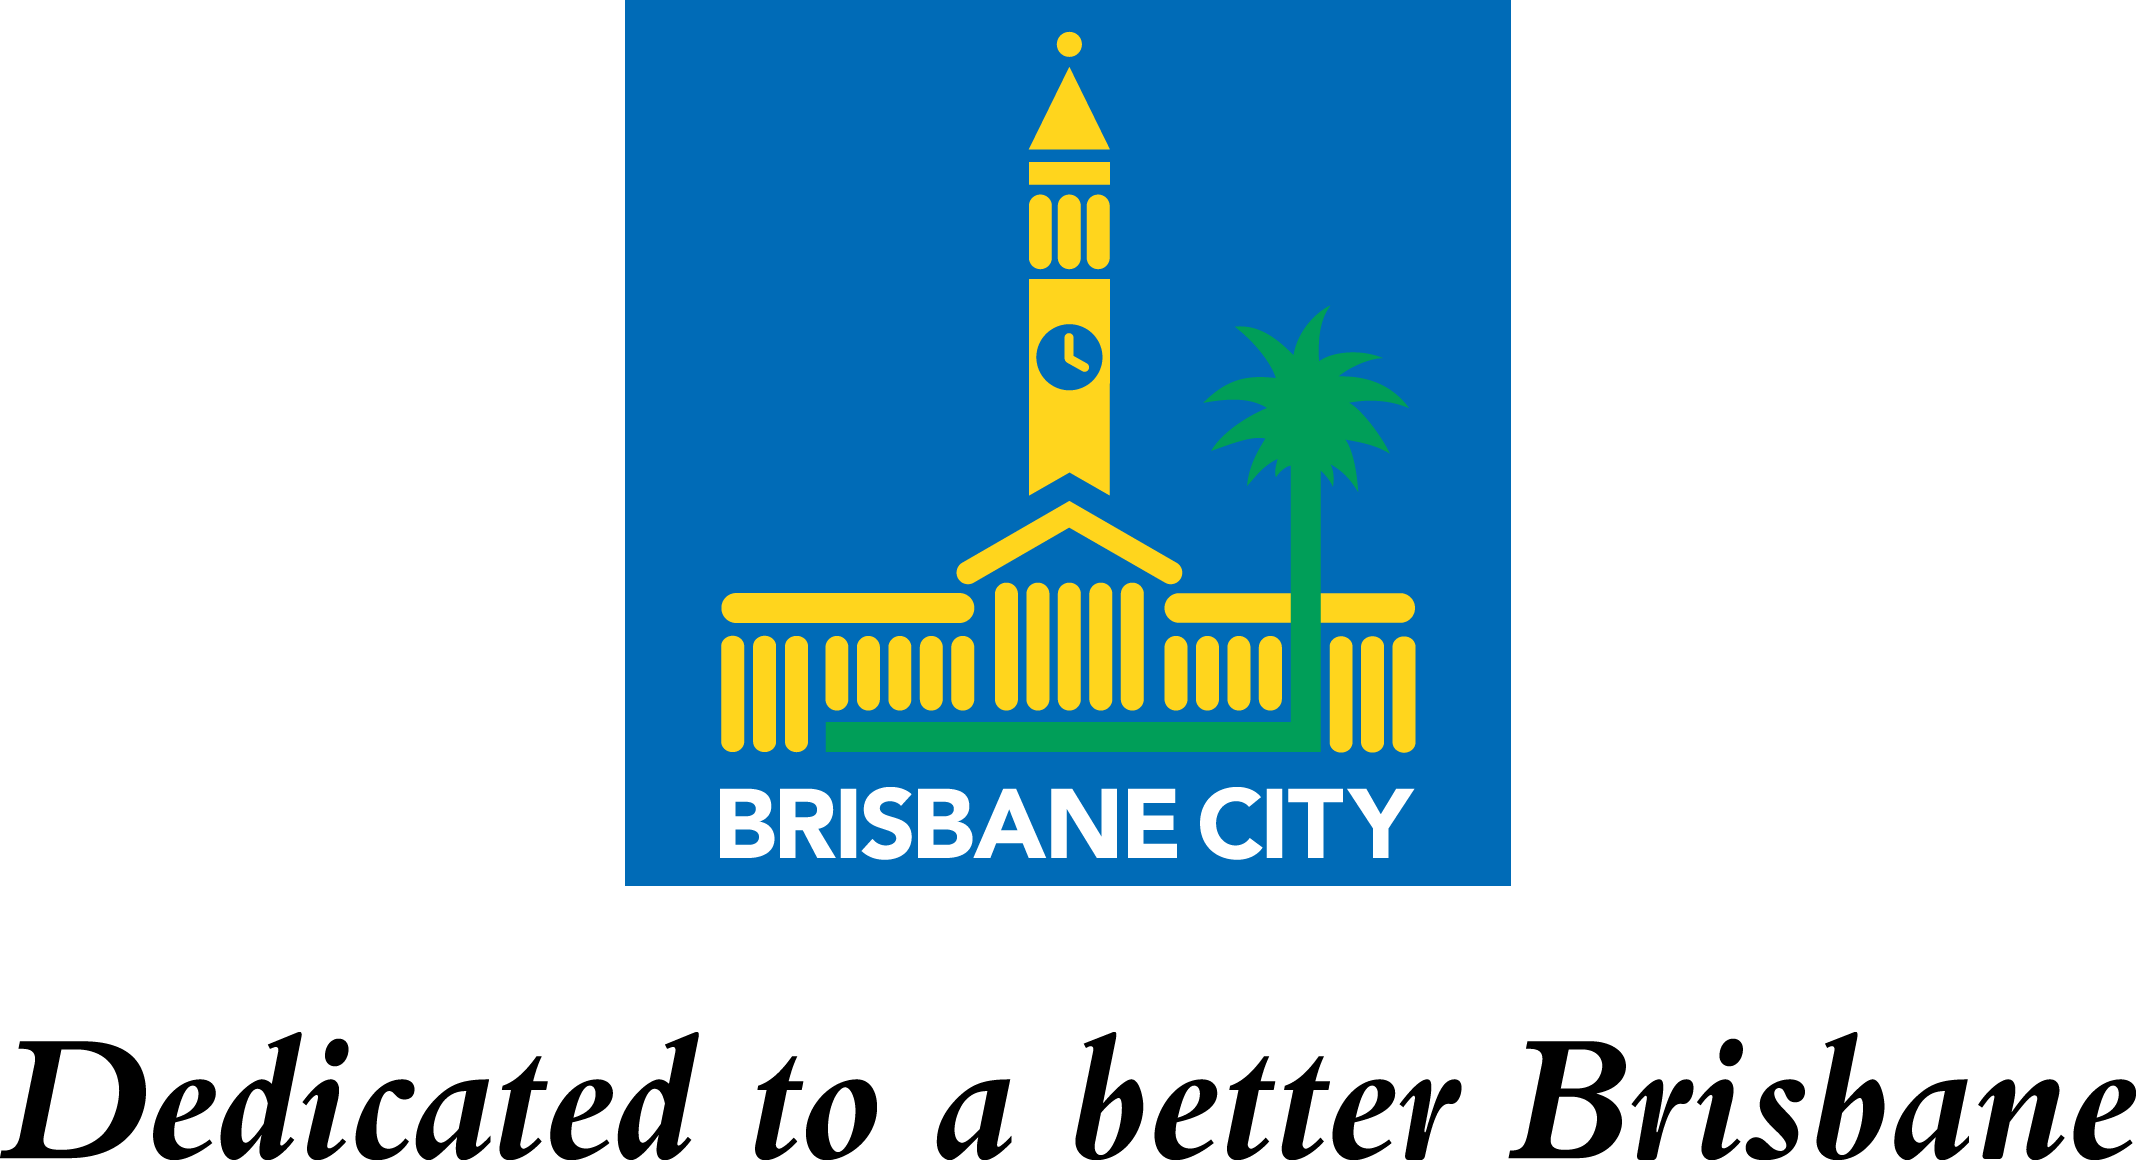 Brisbane City Council logo